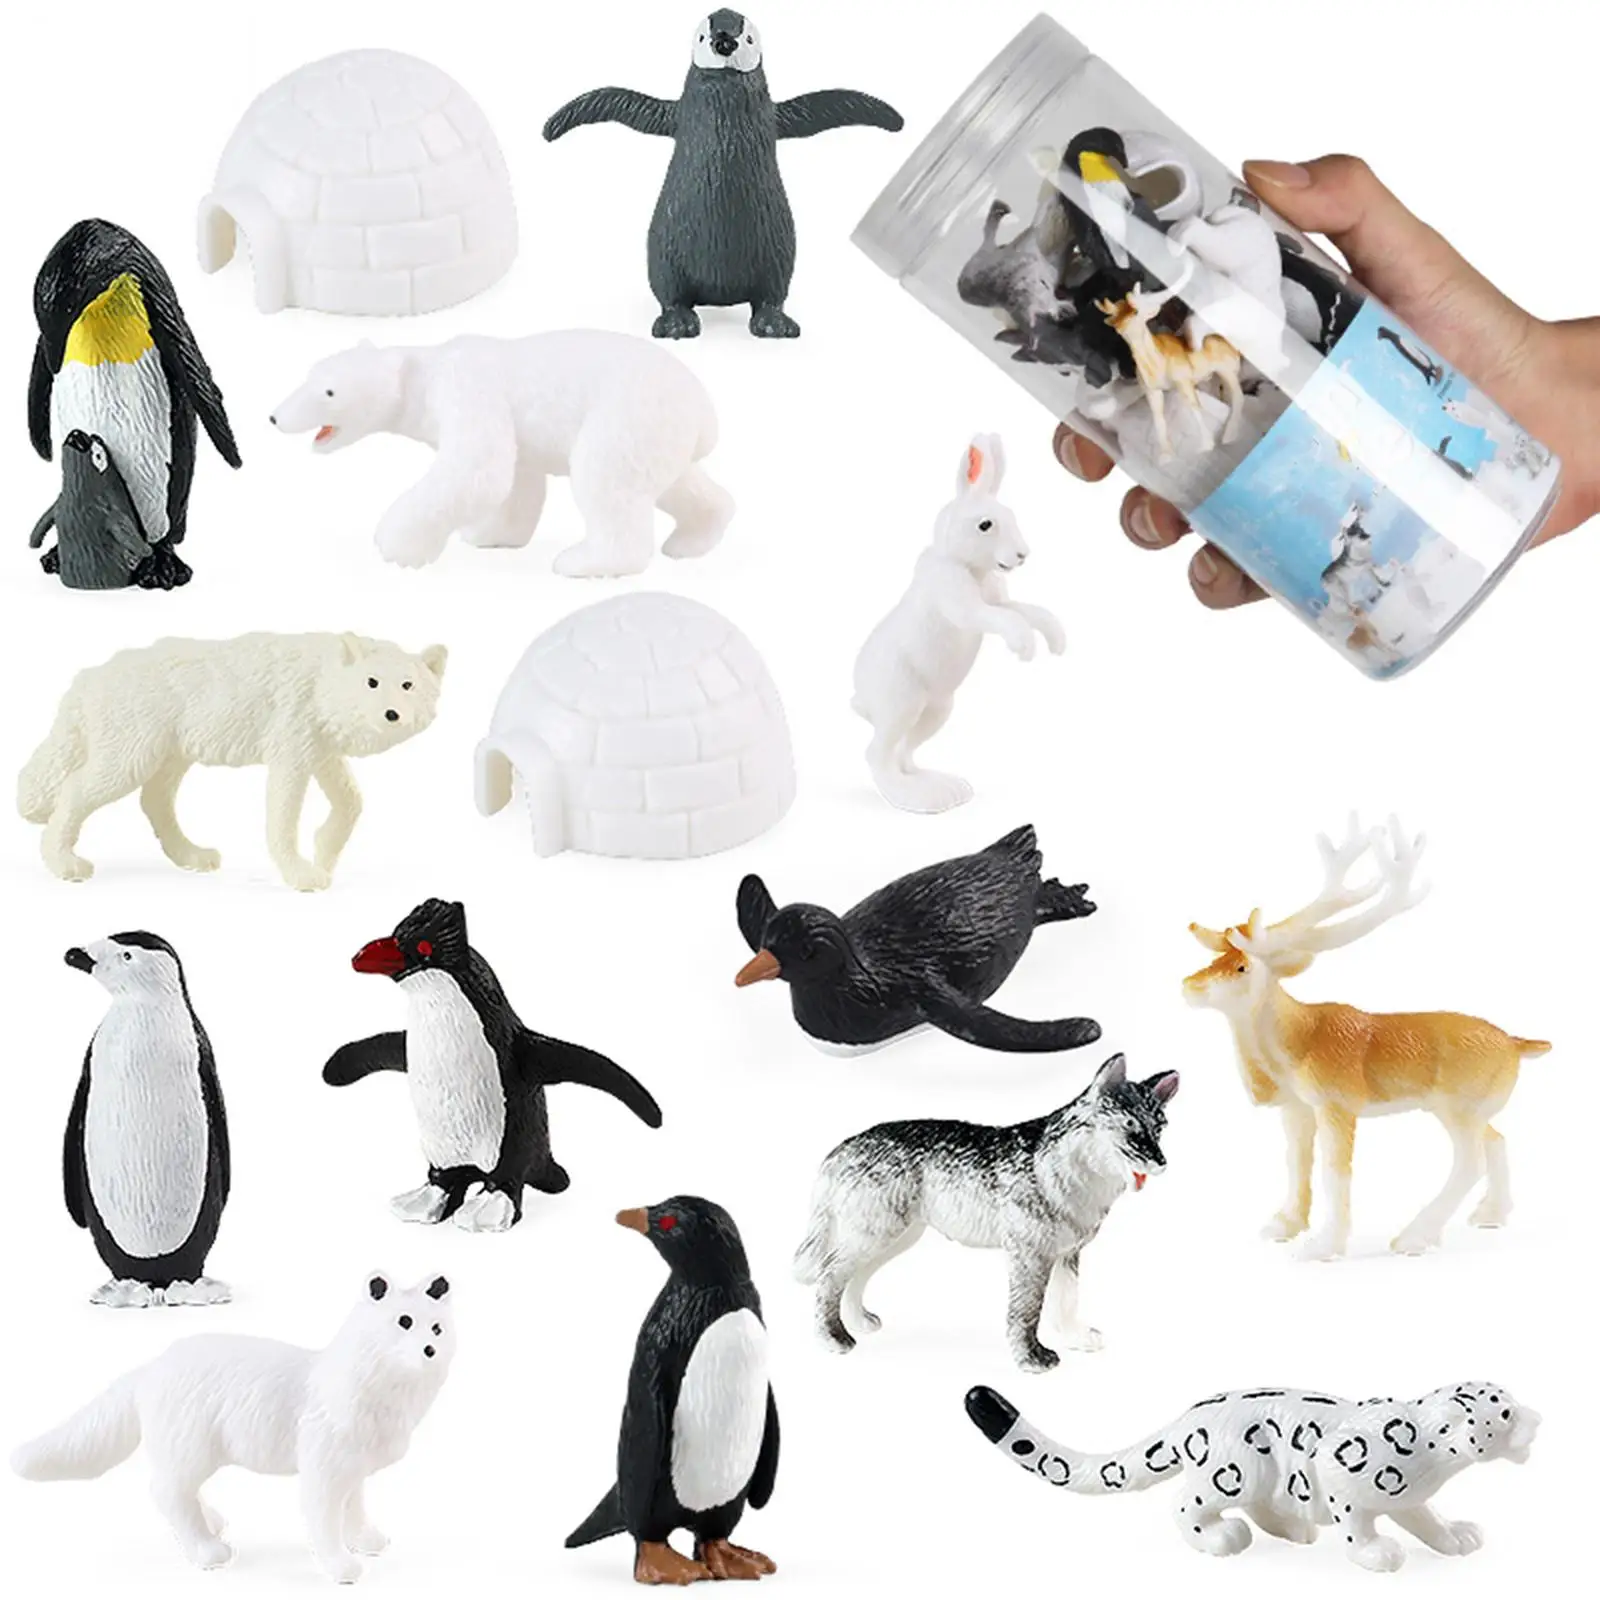 16Pcs Realistic Arctic Animals Includes Arctic Reindeer, Penguins, Polar Bear, Arctic Fox, Igloo Figure Toy for Birthday Gift